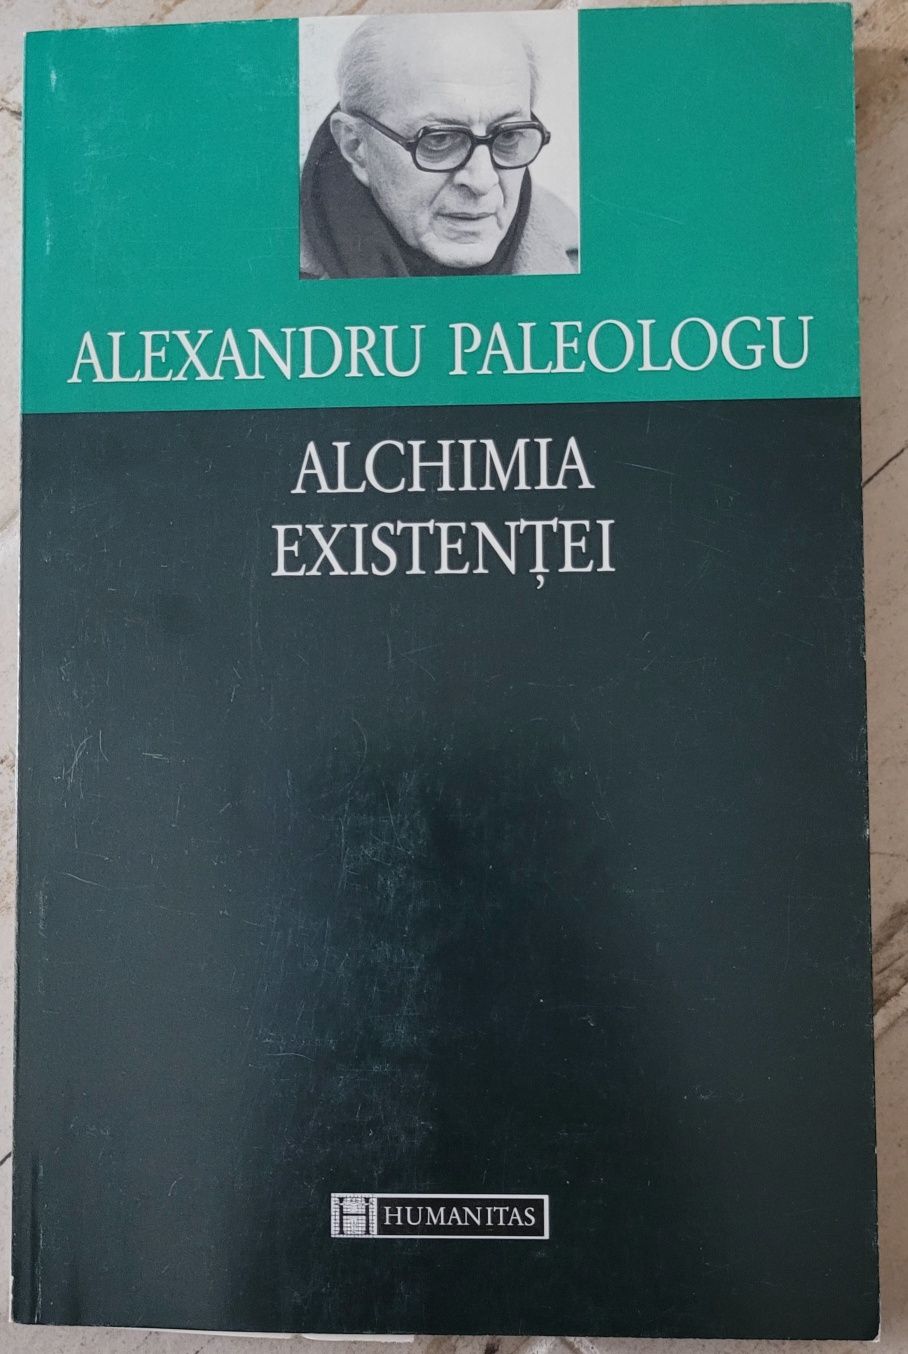 Alexandru Paleologu, "Alchimia existenței"